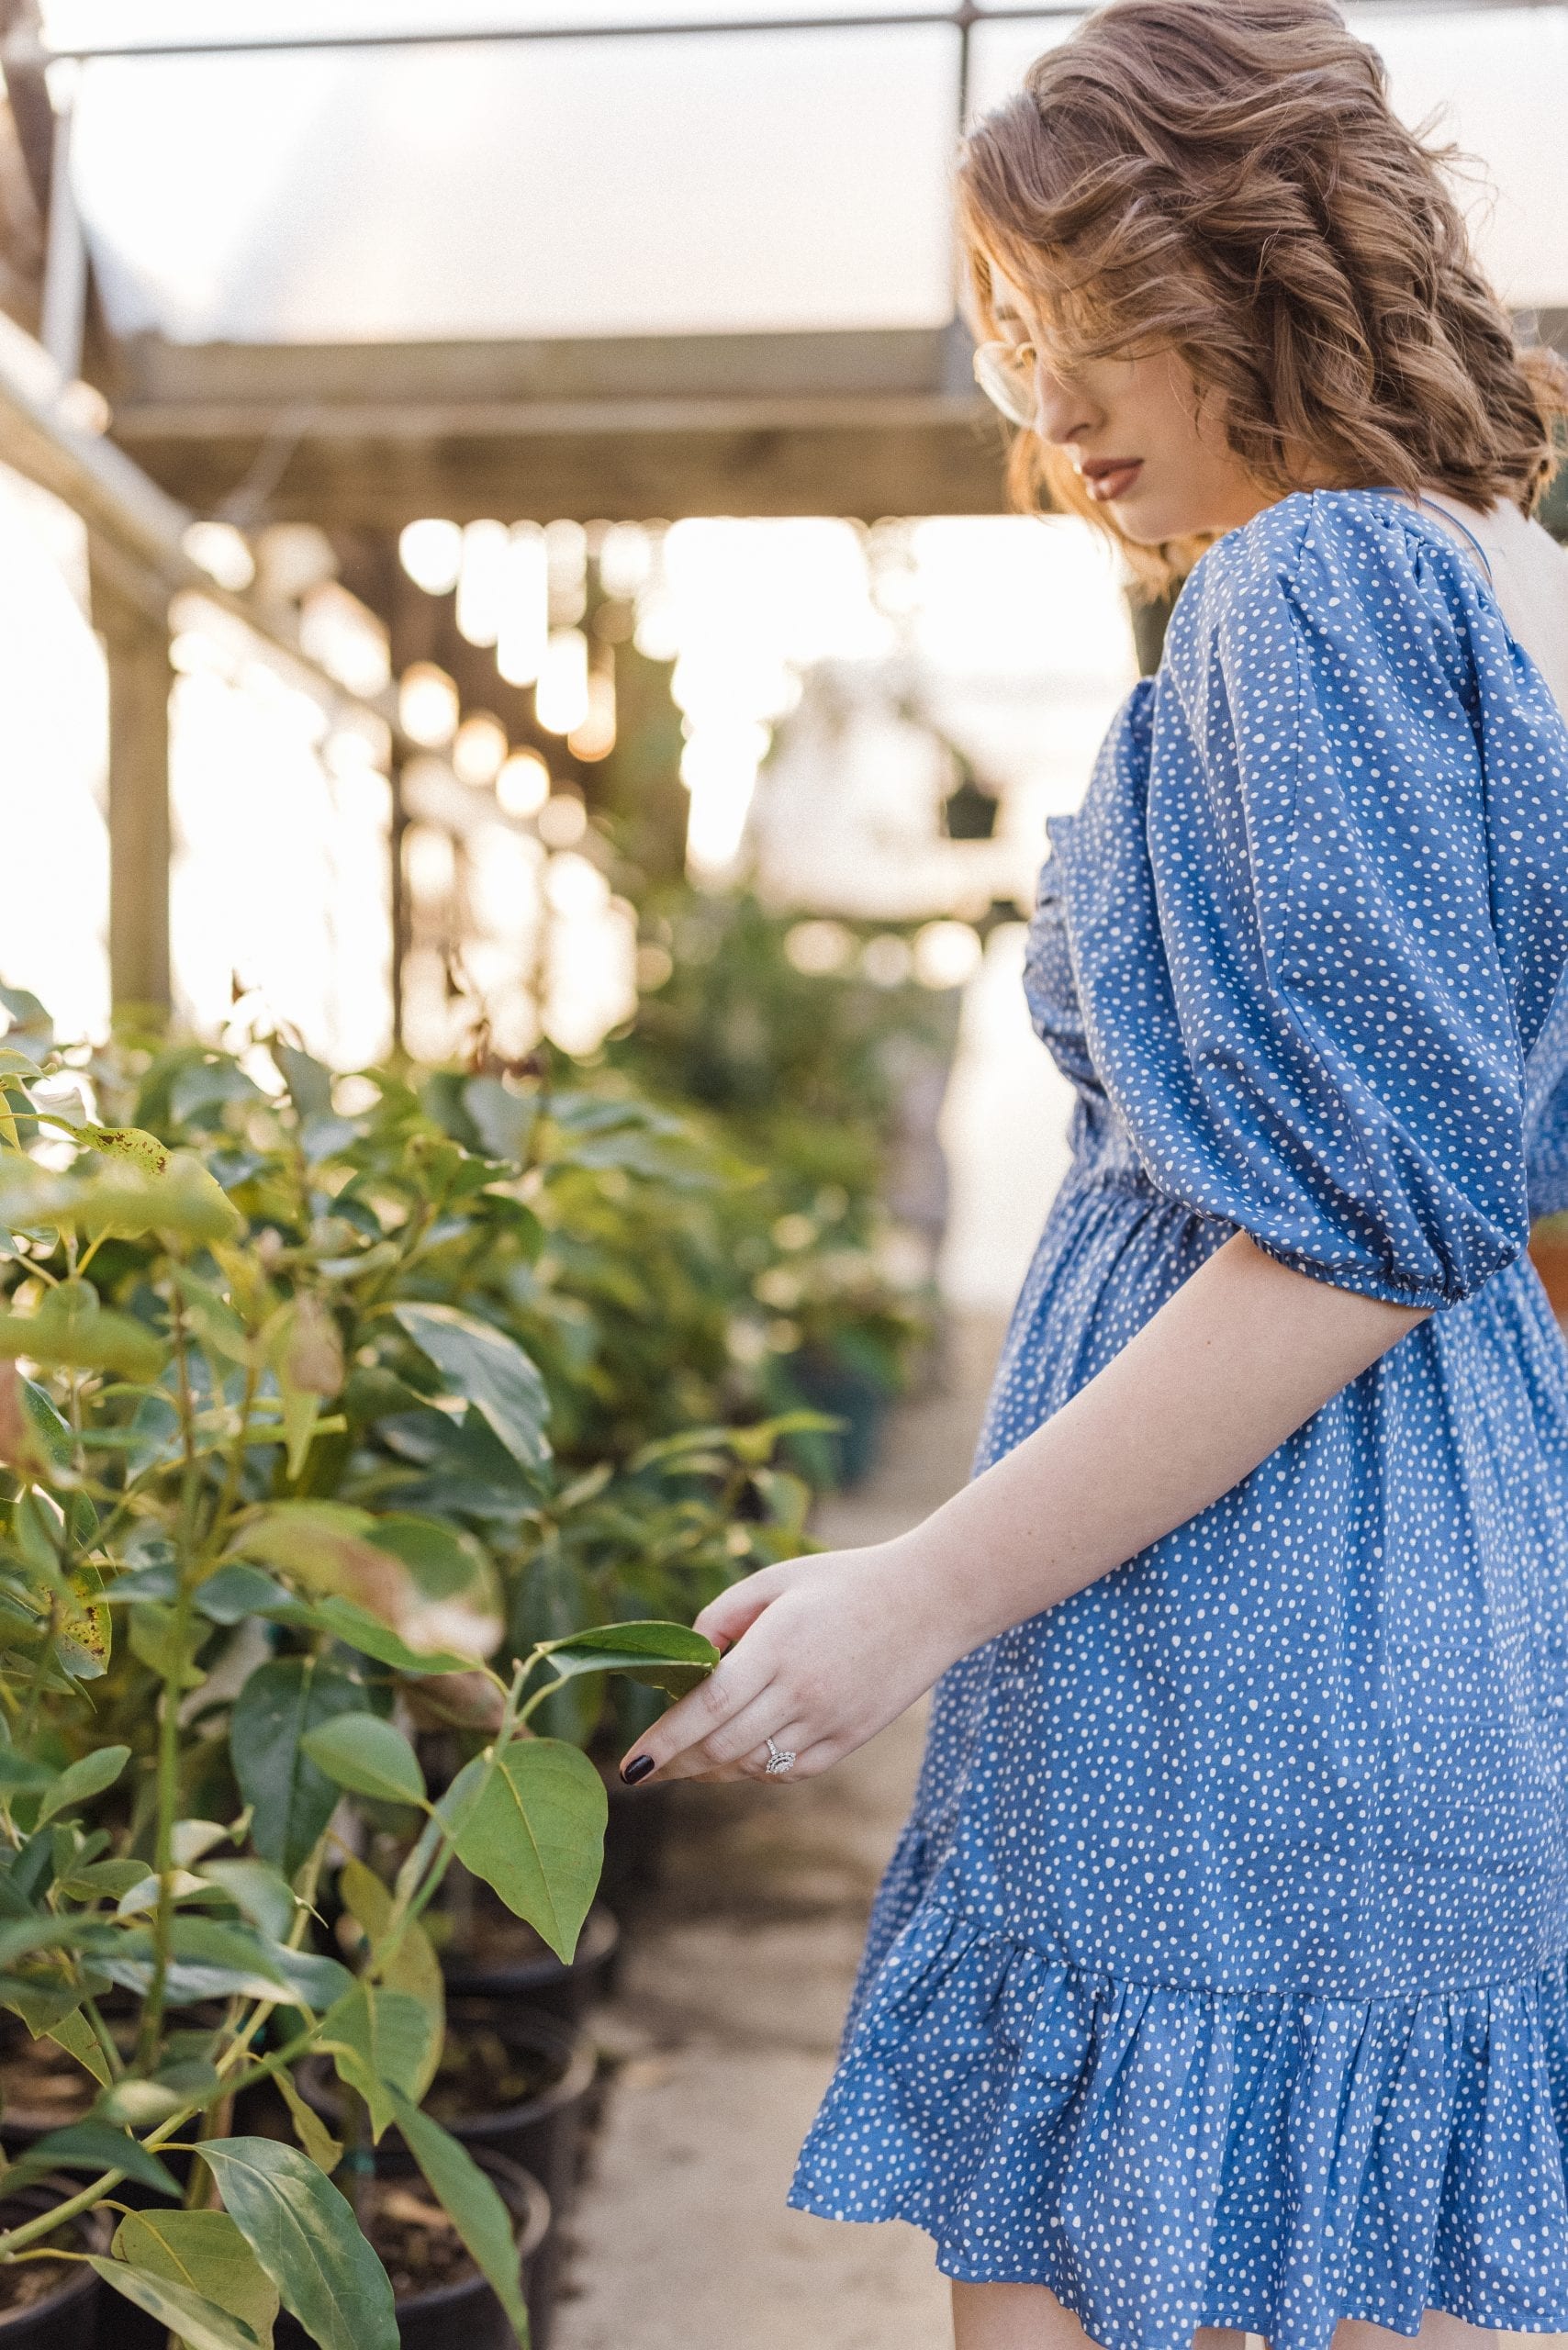 future bride explores plants in greenhouse